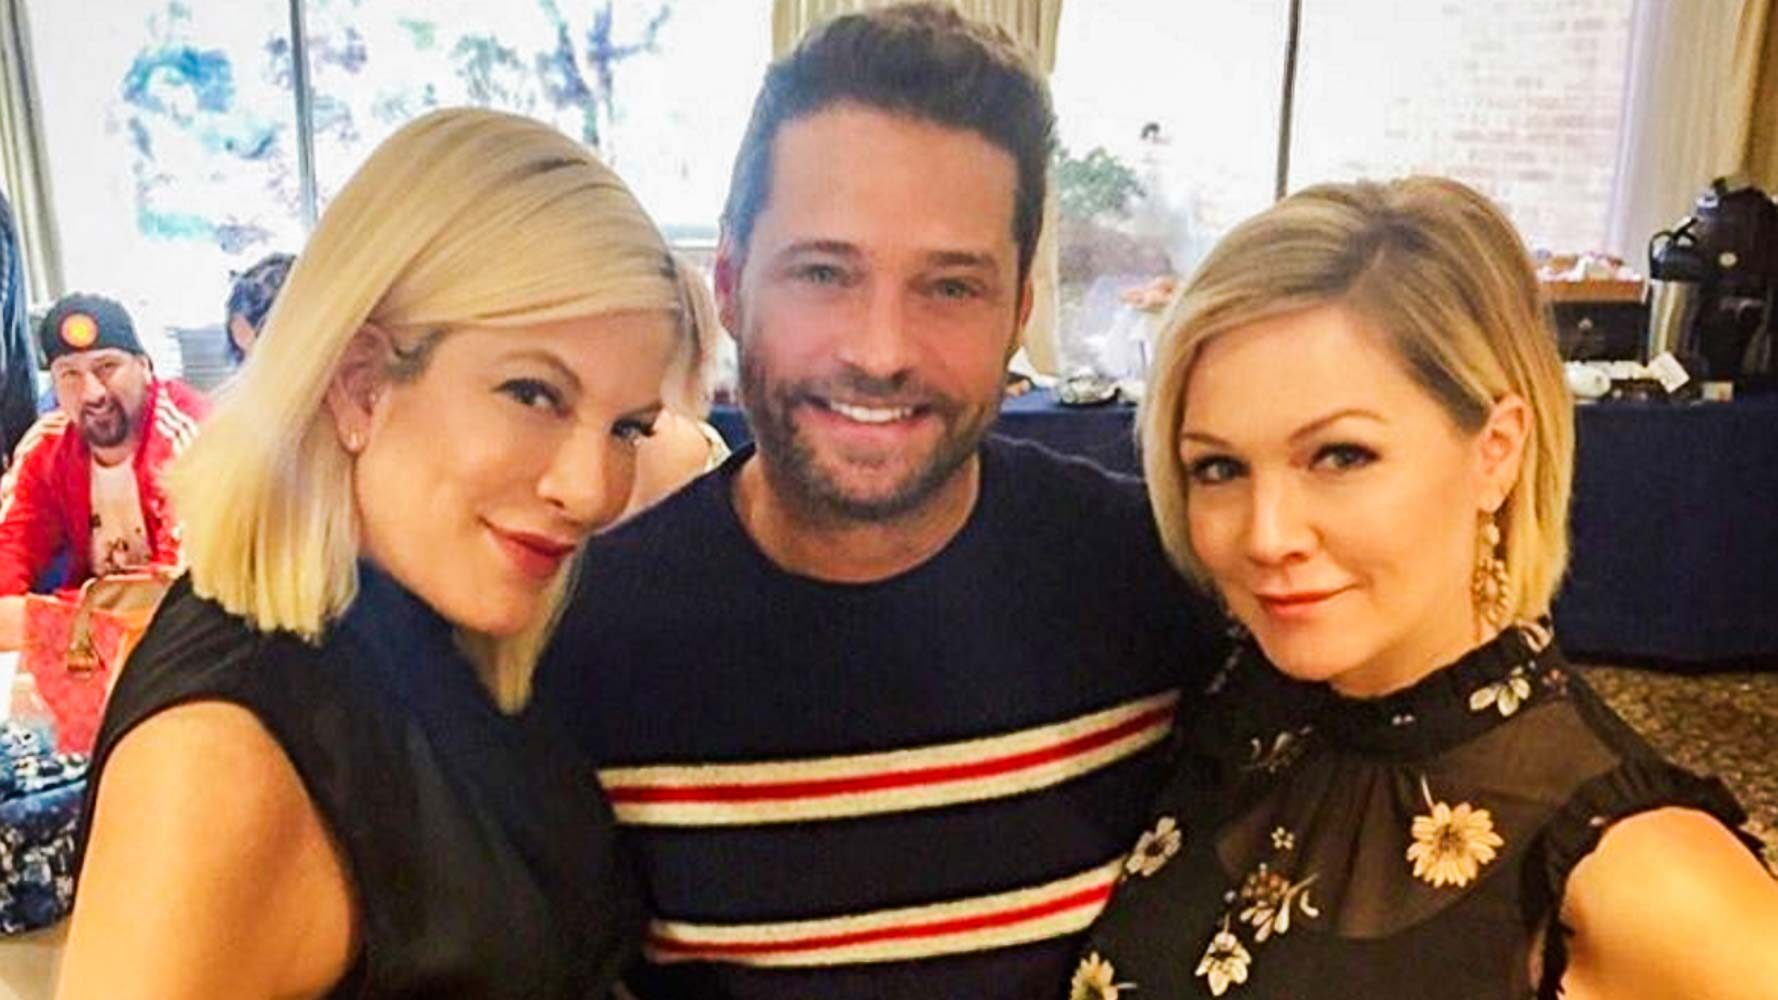 IN PHOTOS: ‘Beverly Hills 90210’ stars reunite